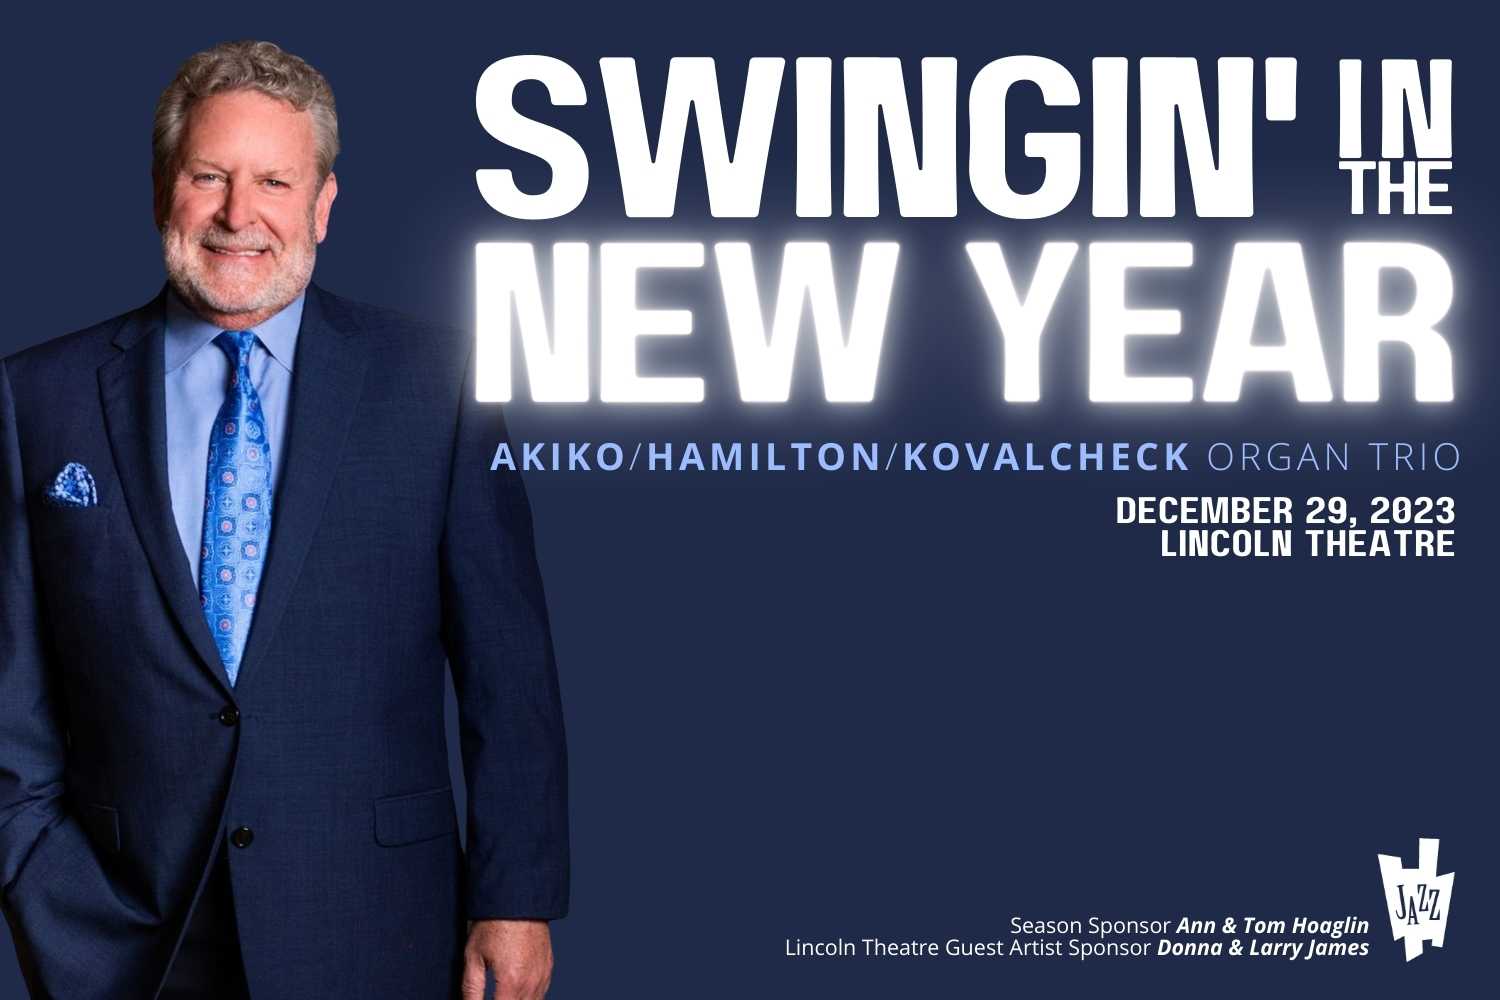 Swingin’ in the New Year